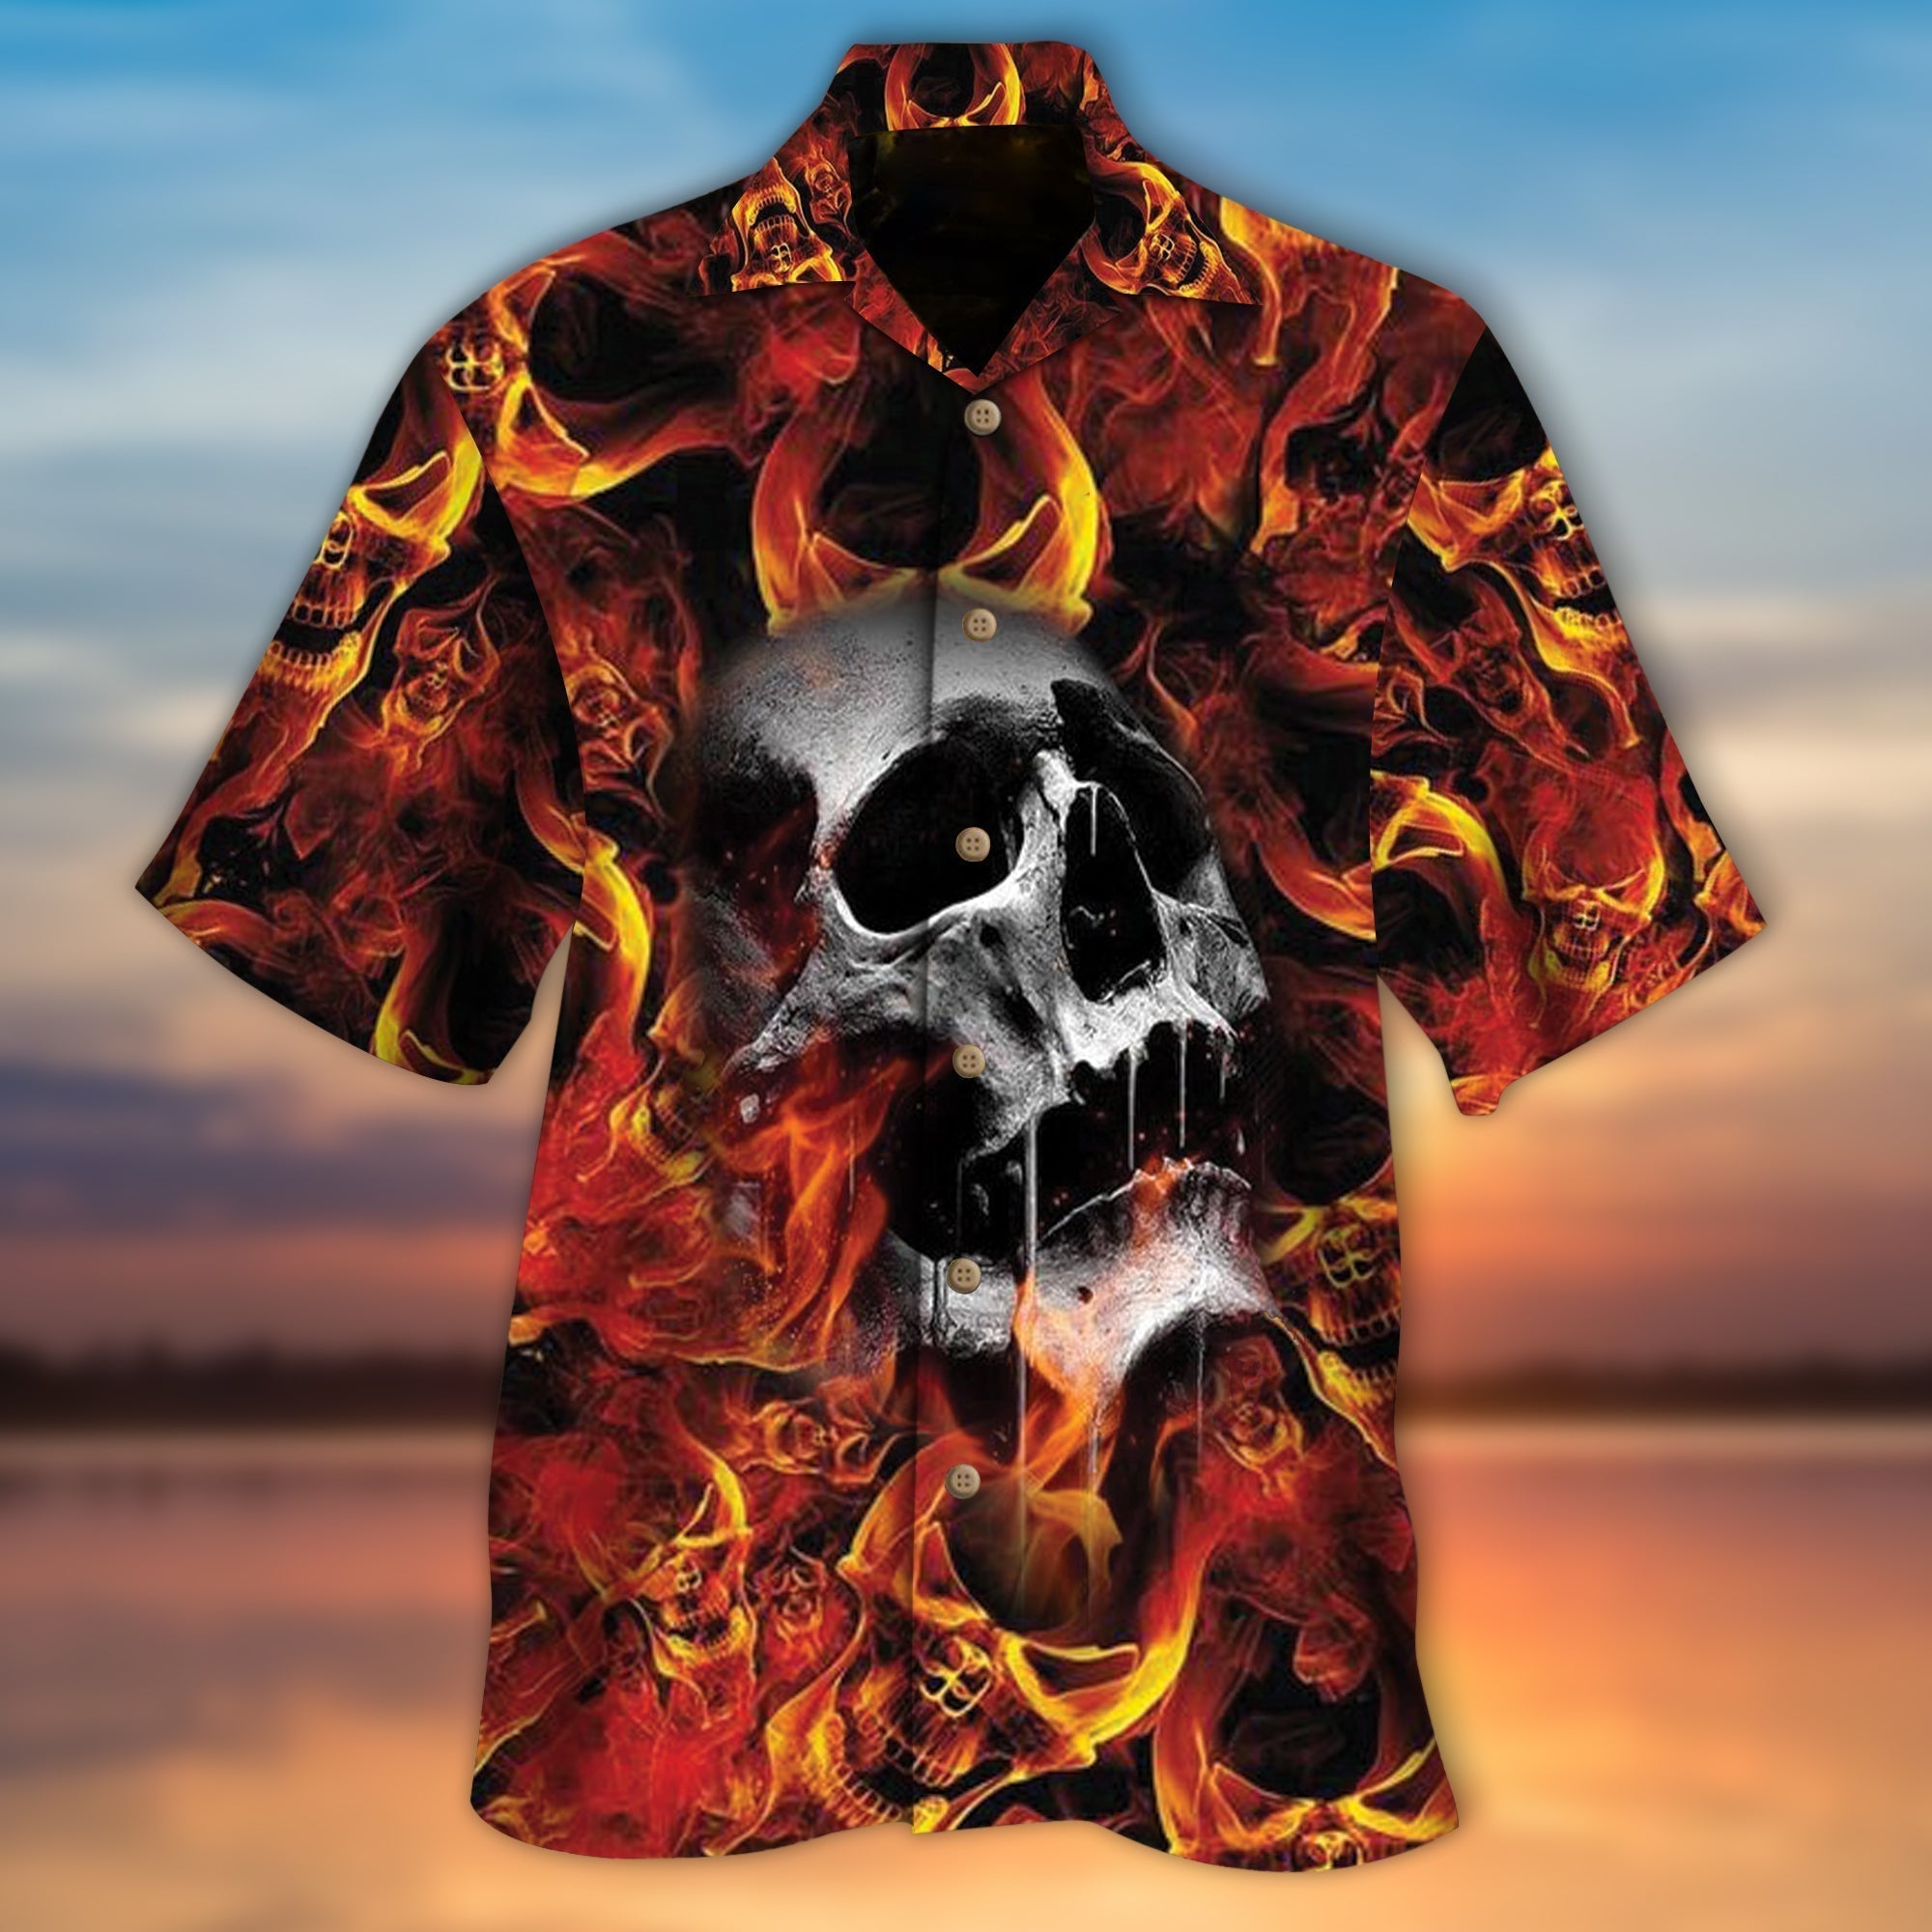 Skull Fire Hawaiian Shirt For Him Her/ Men Skull Hawaii Aloha Beach Shirt